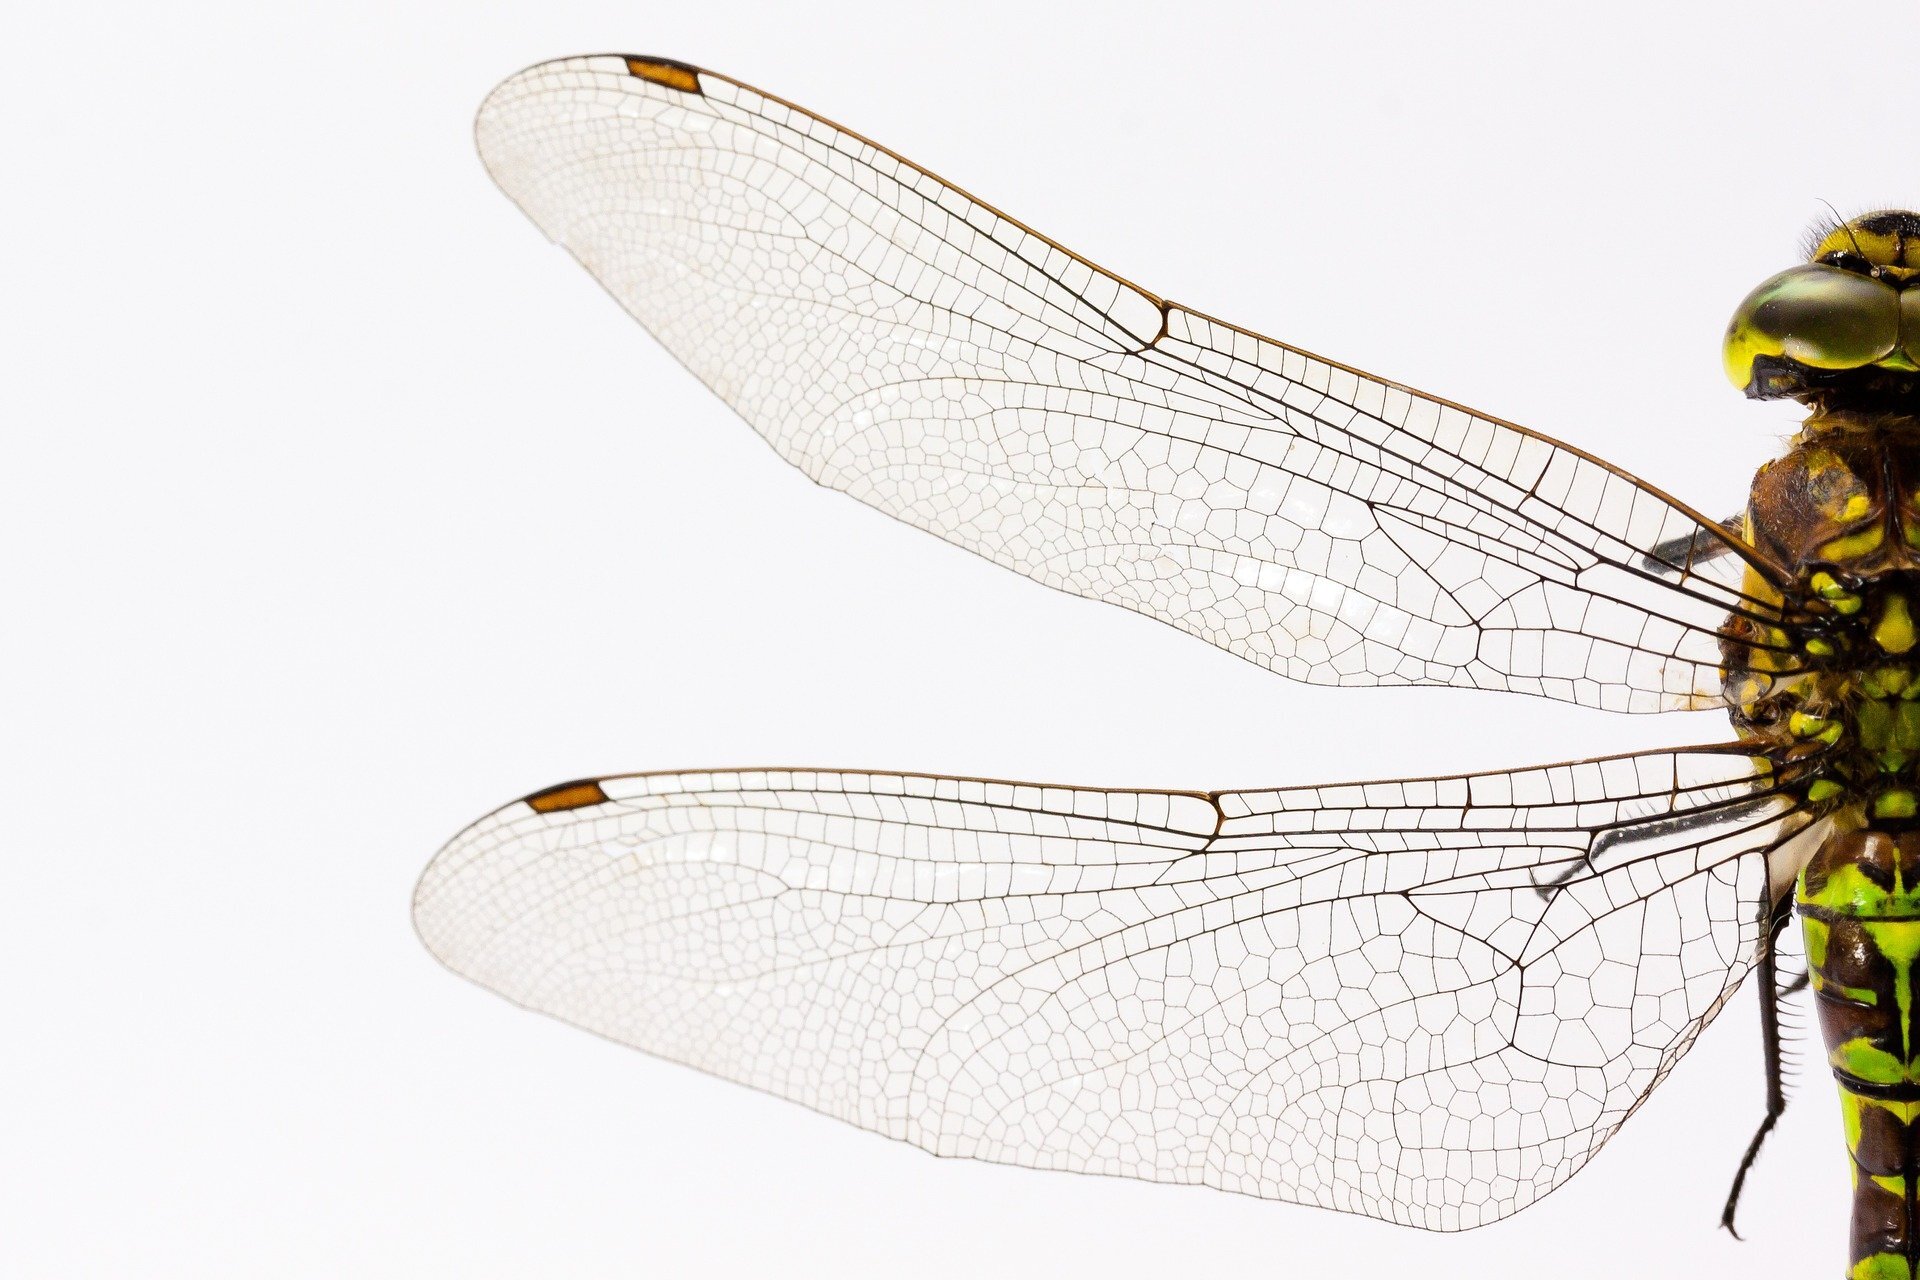 Bacteria-shredding insect wings inspire new antibacterial packaging